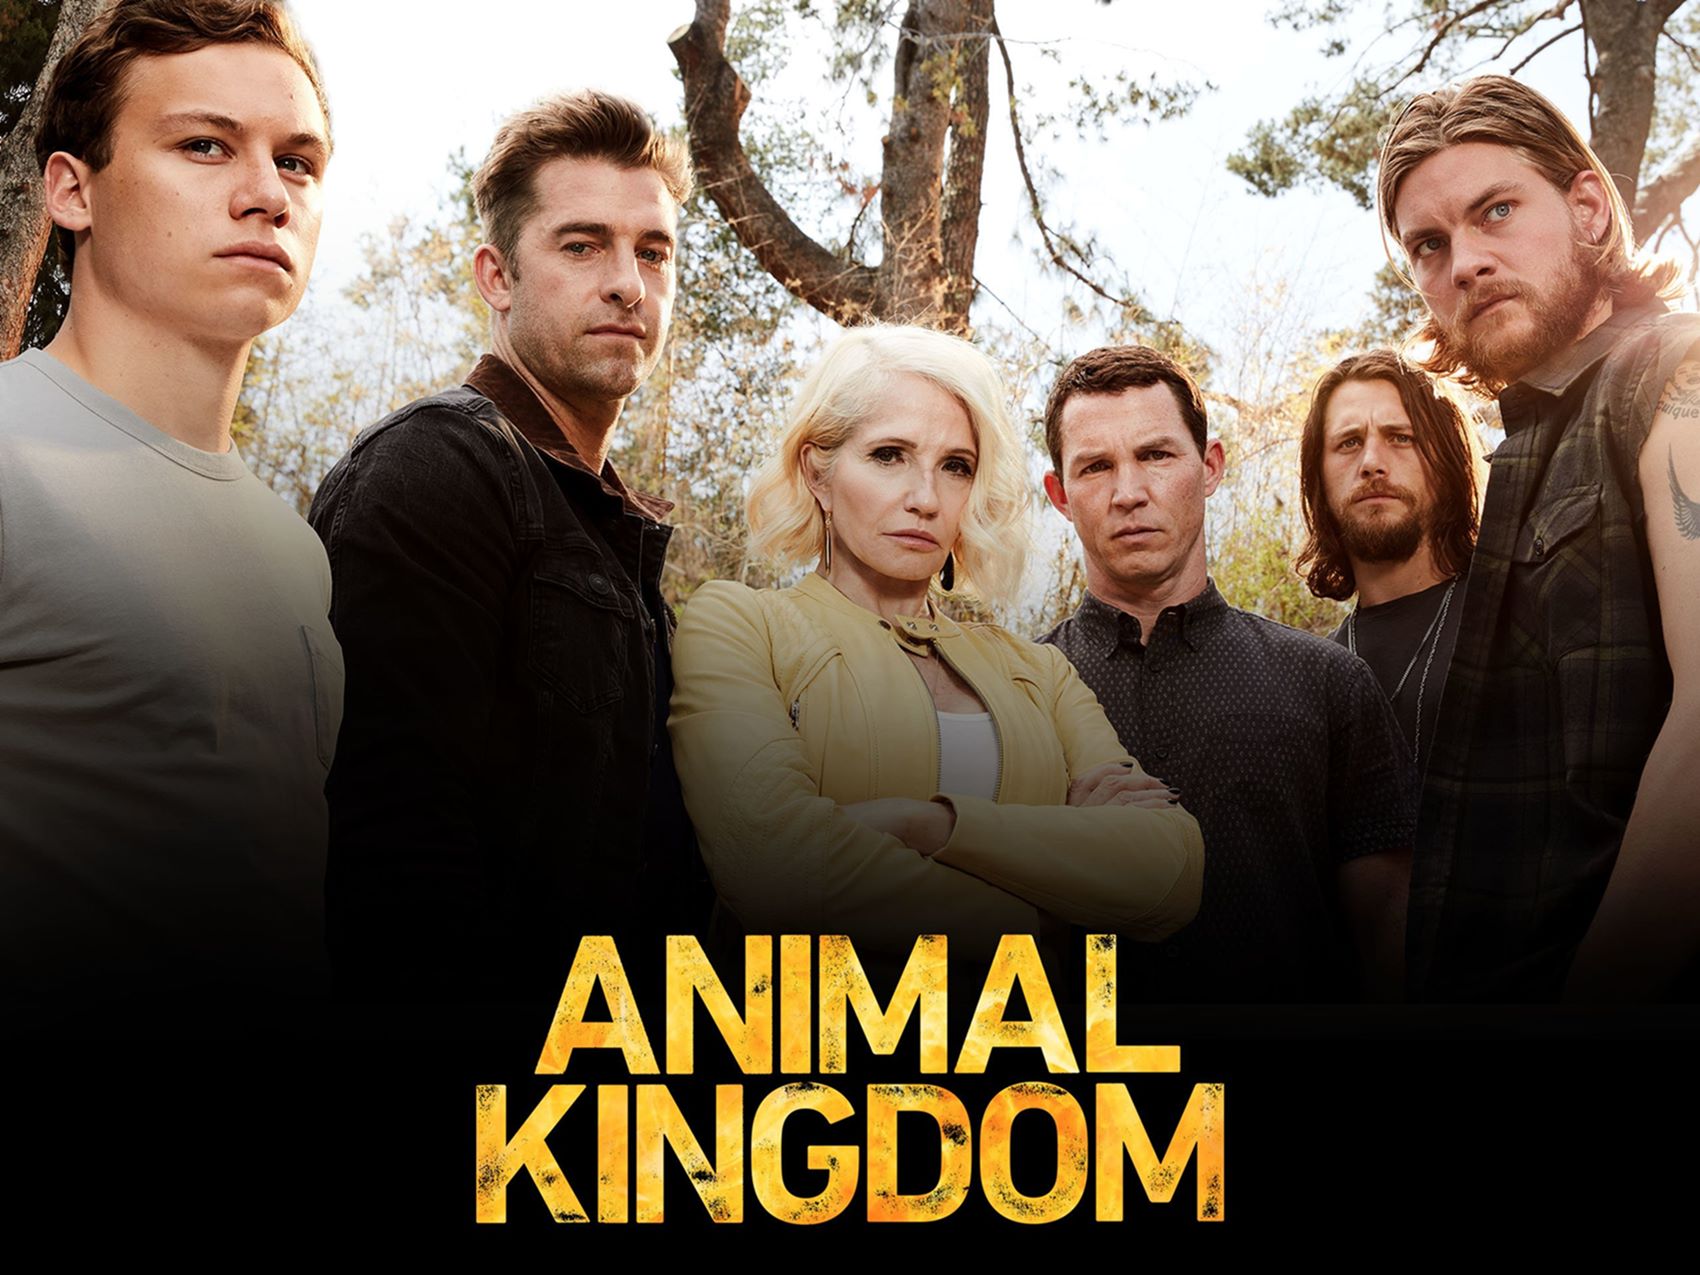 How To Watch Animal Kingdom Season 6